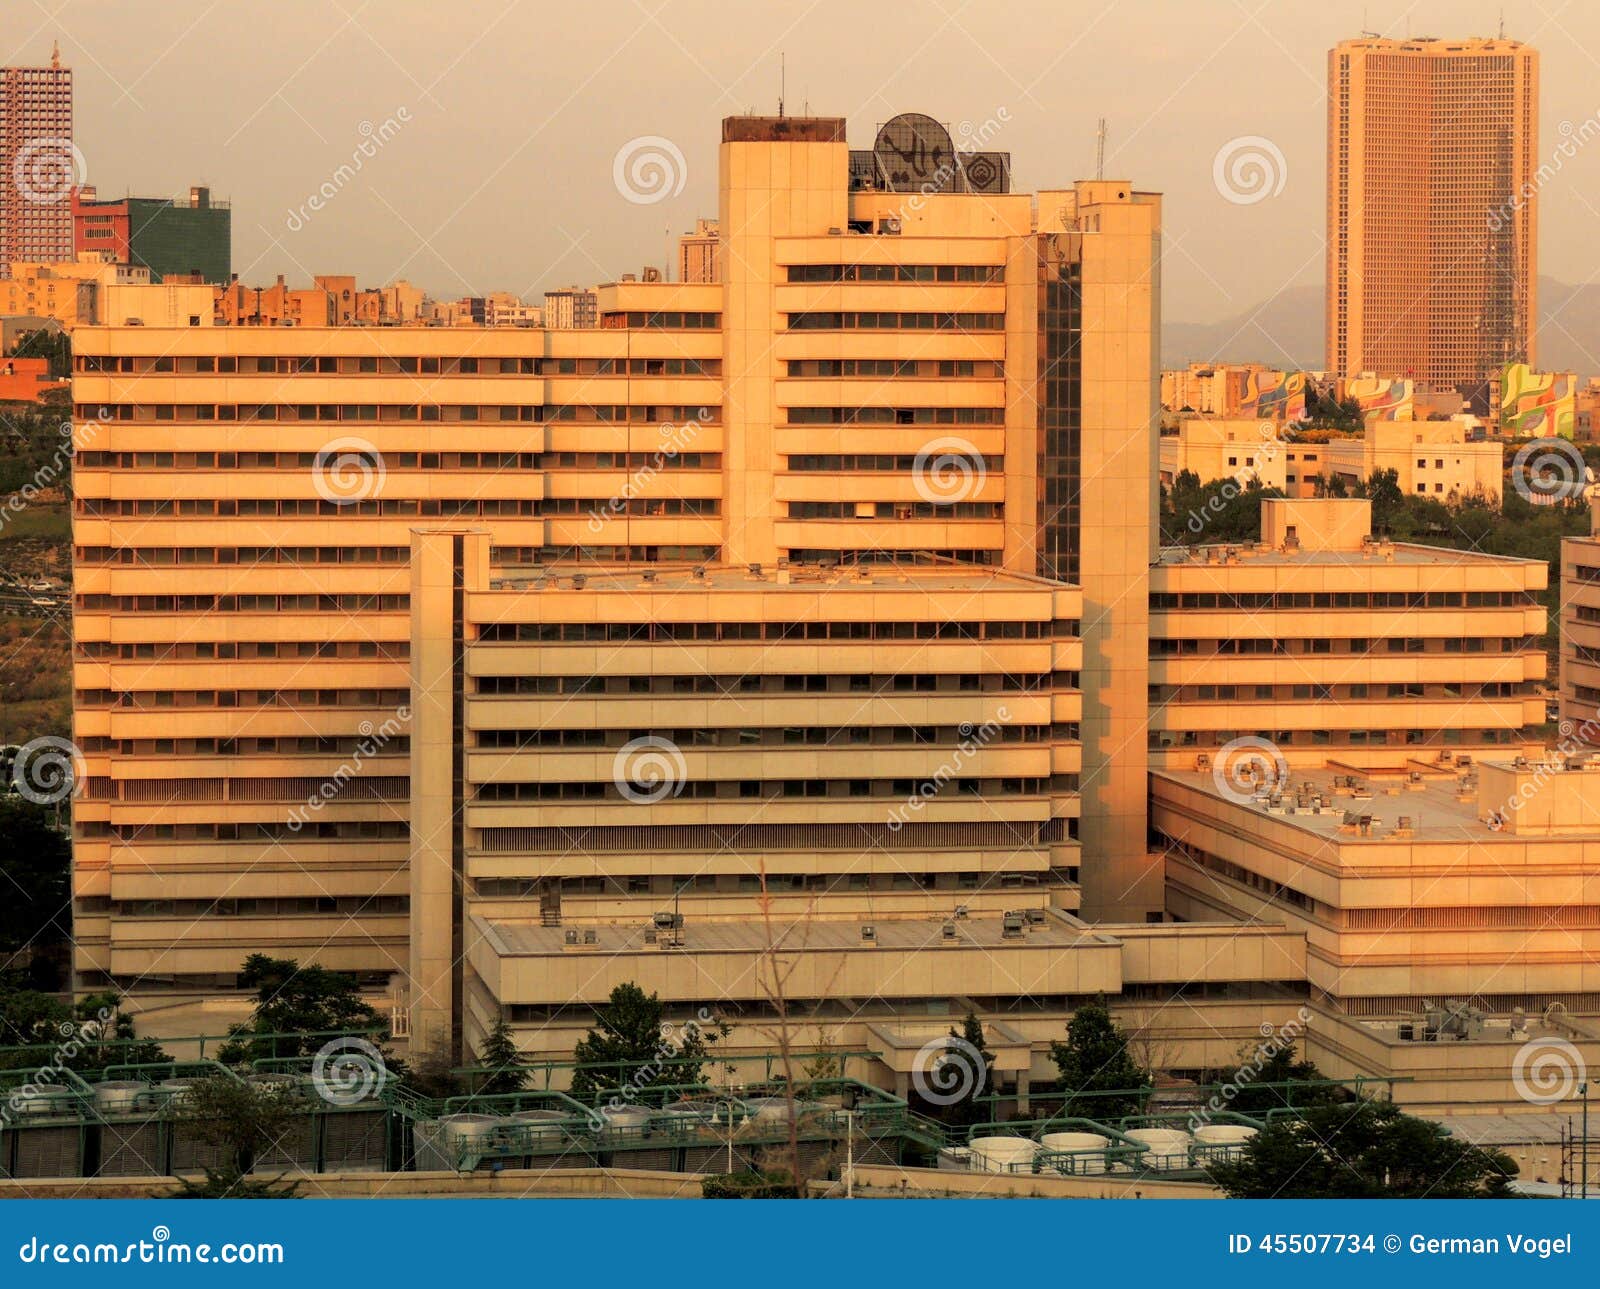 milad hospital by tehran university of medical sciences